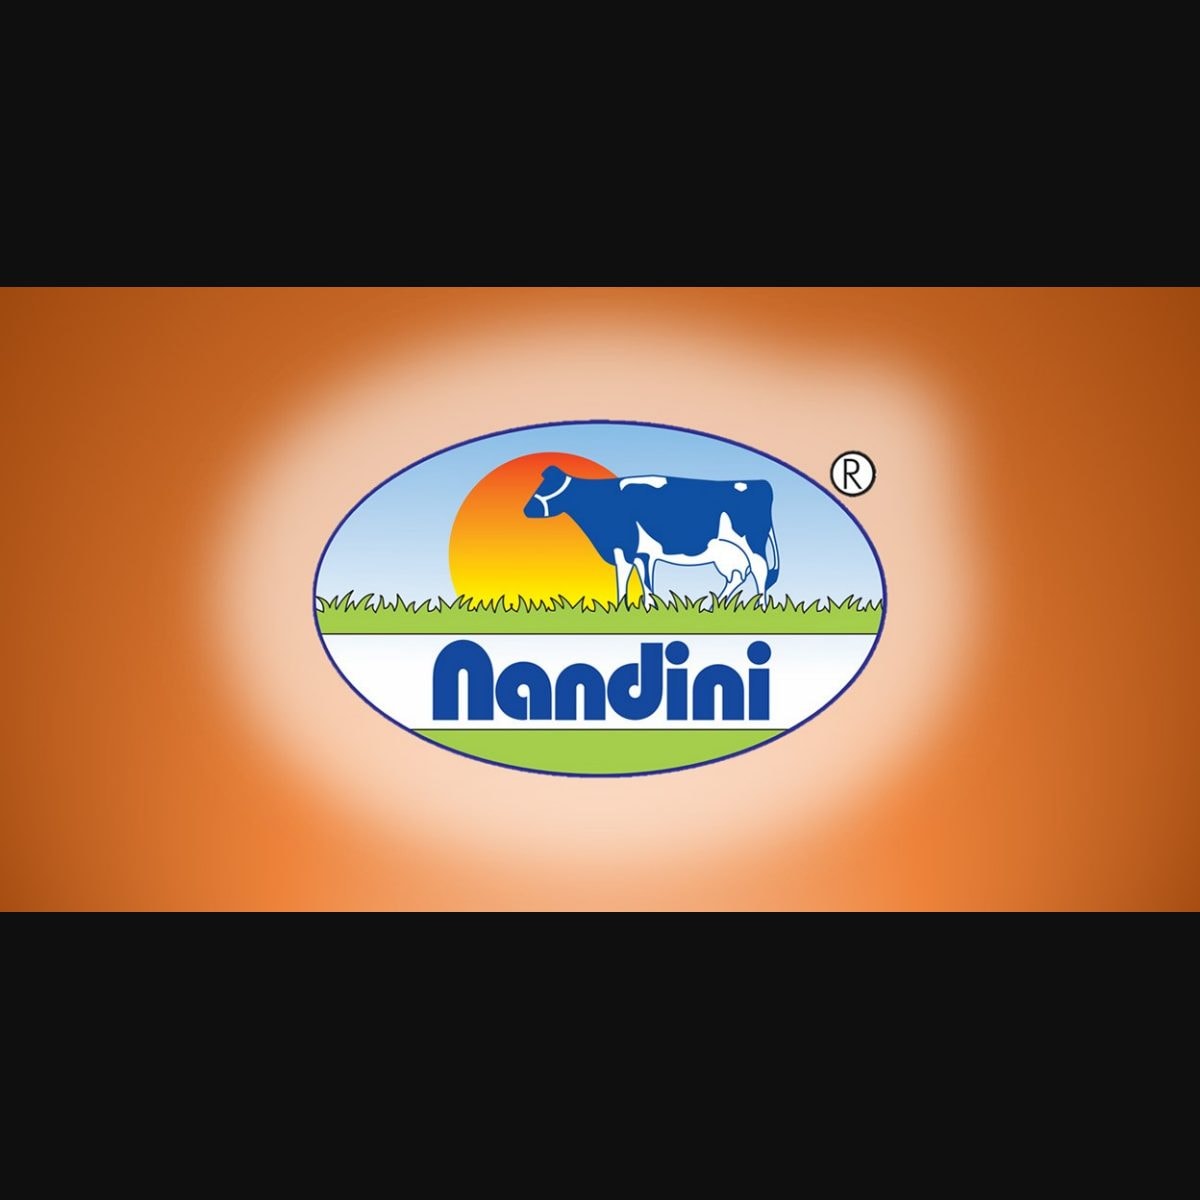 Nandini Milk Paradise (Bangalore) » Indian Cattle